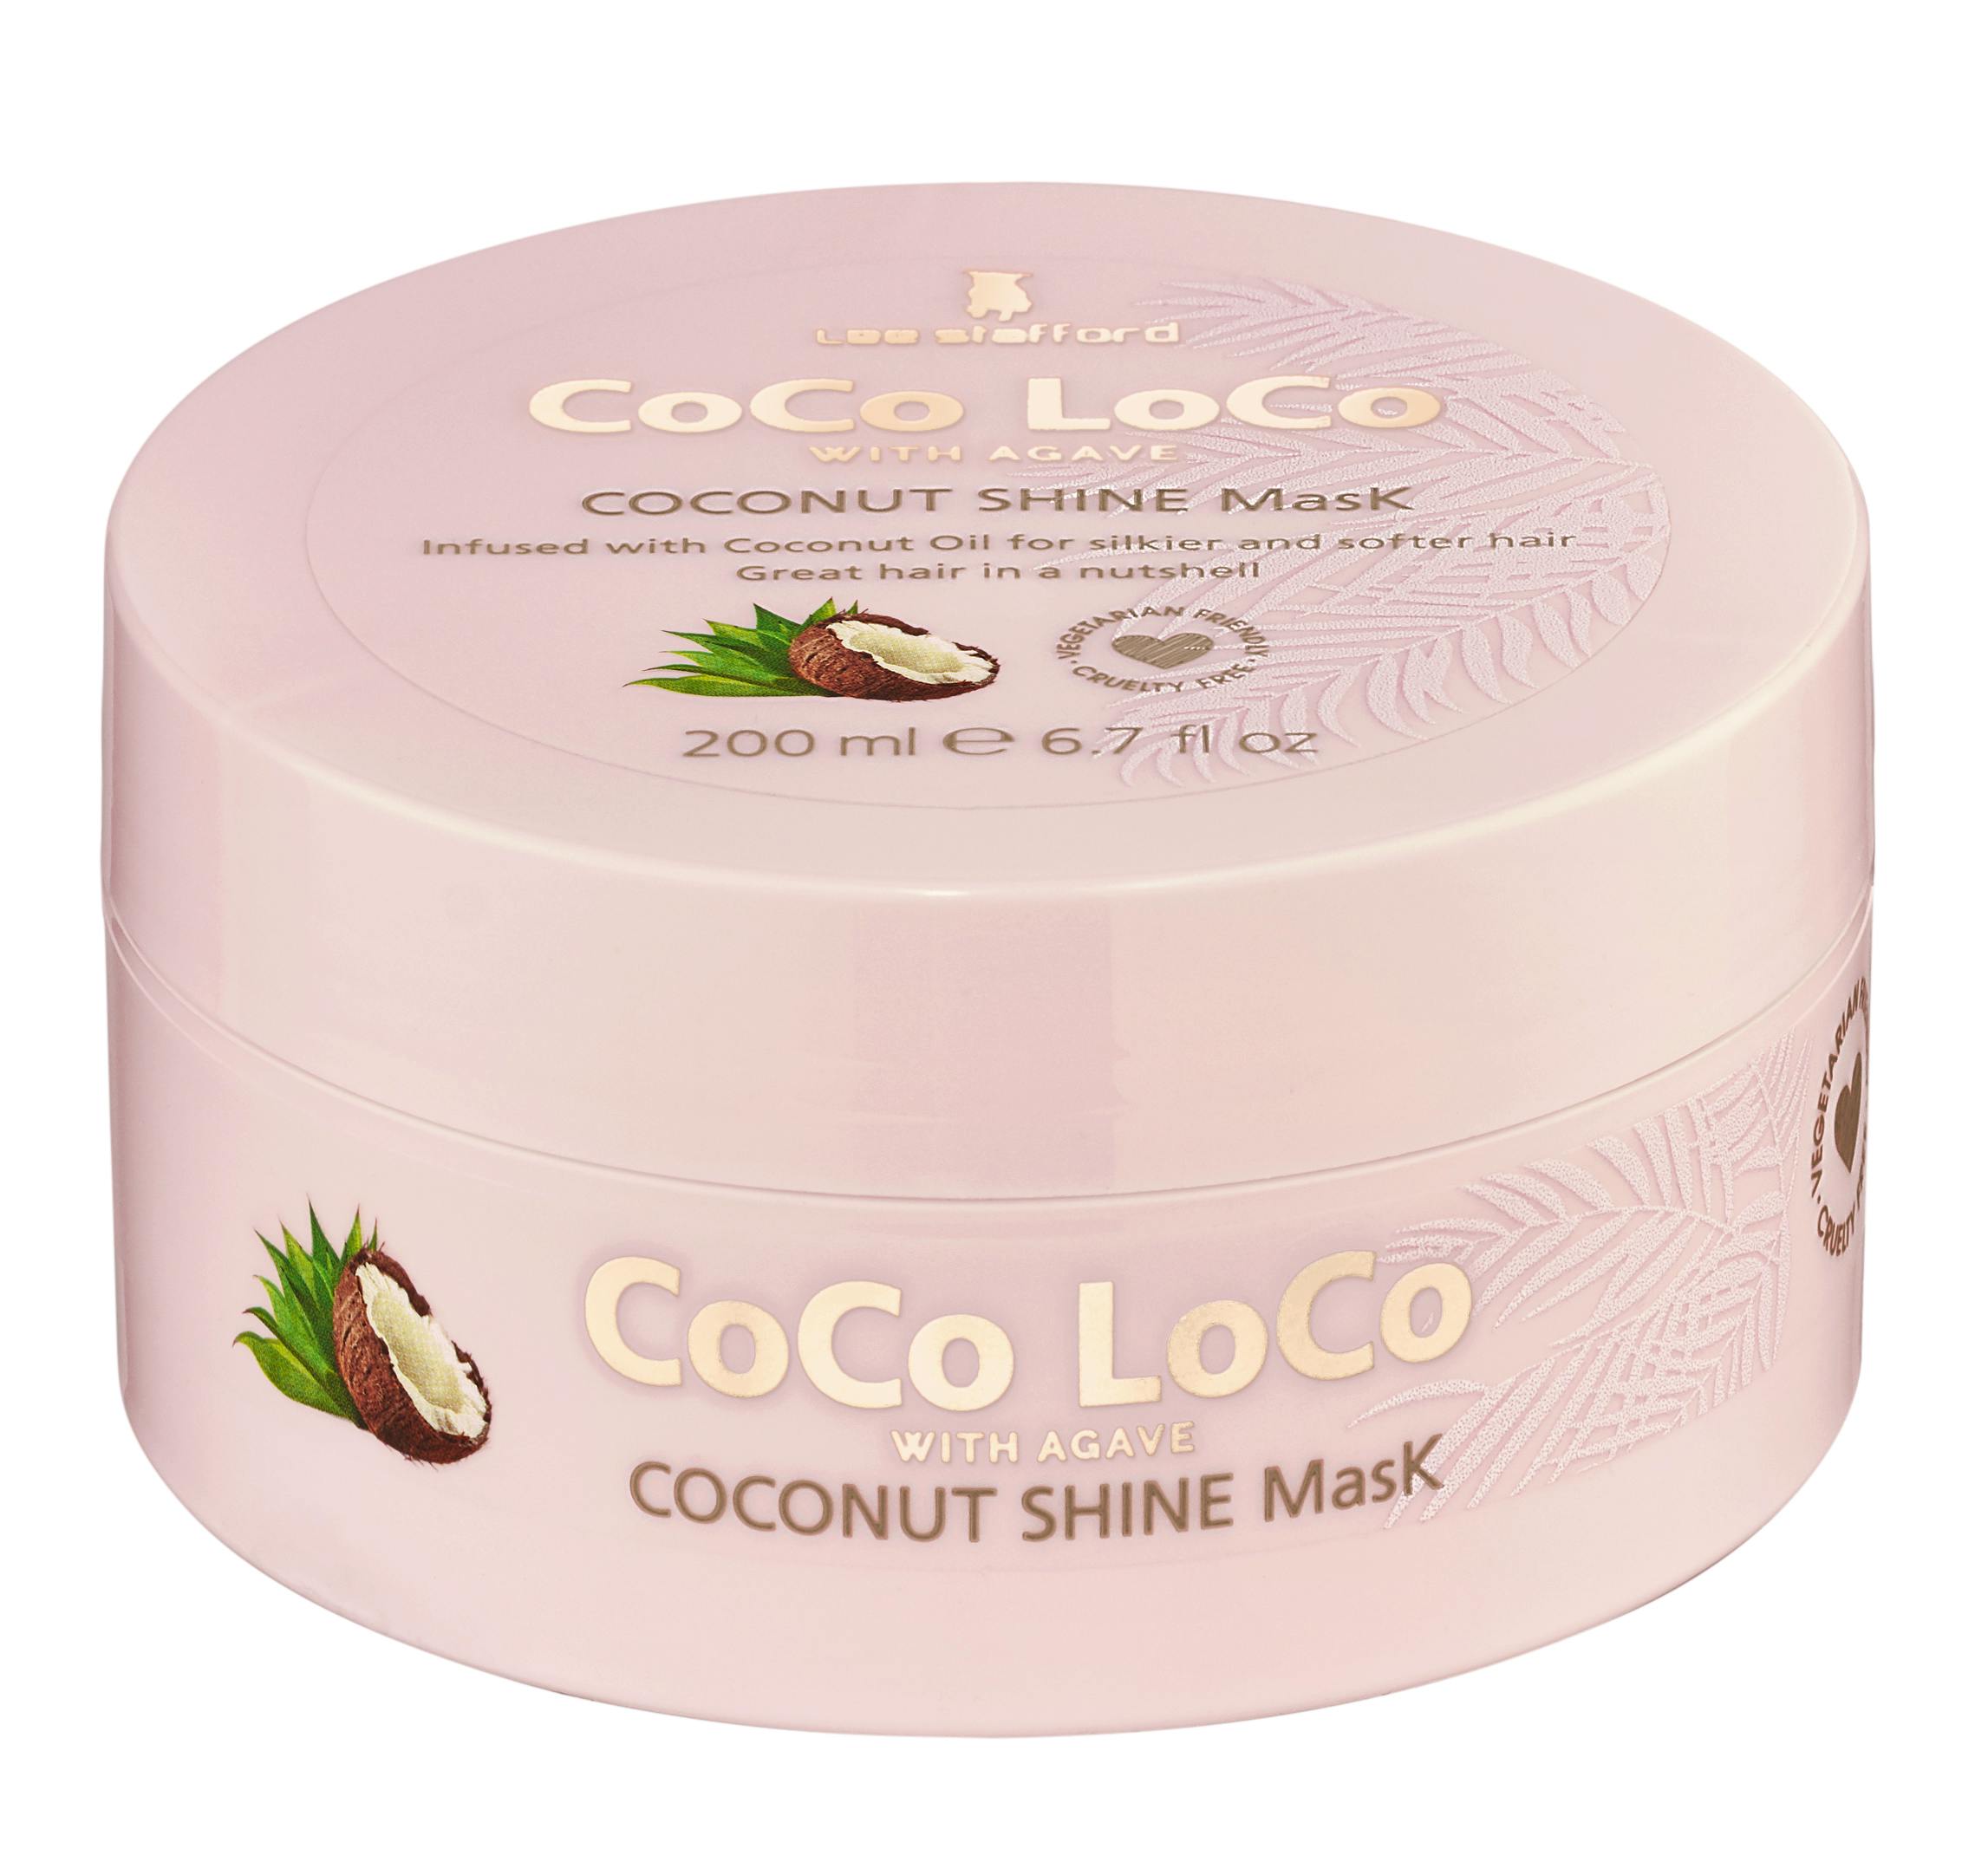 Lee ml Loco Mask Stafford Coco Shine 200 Coconut